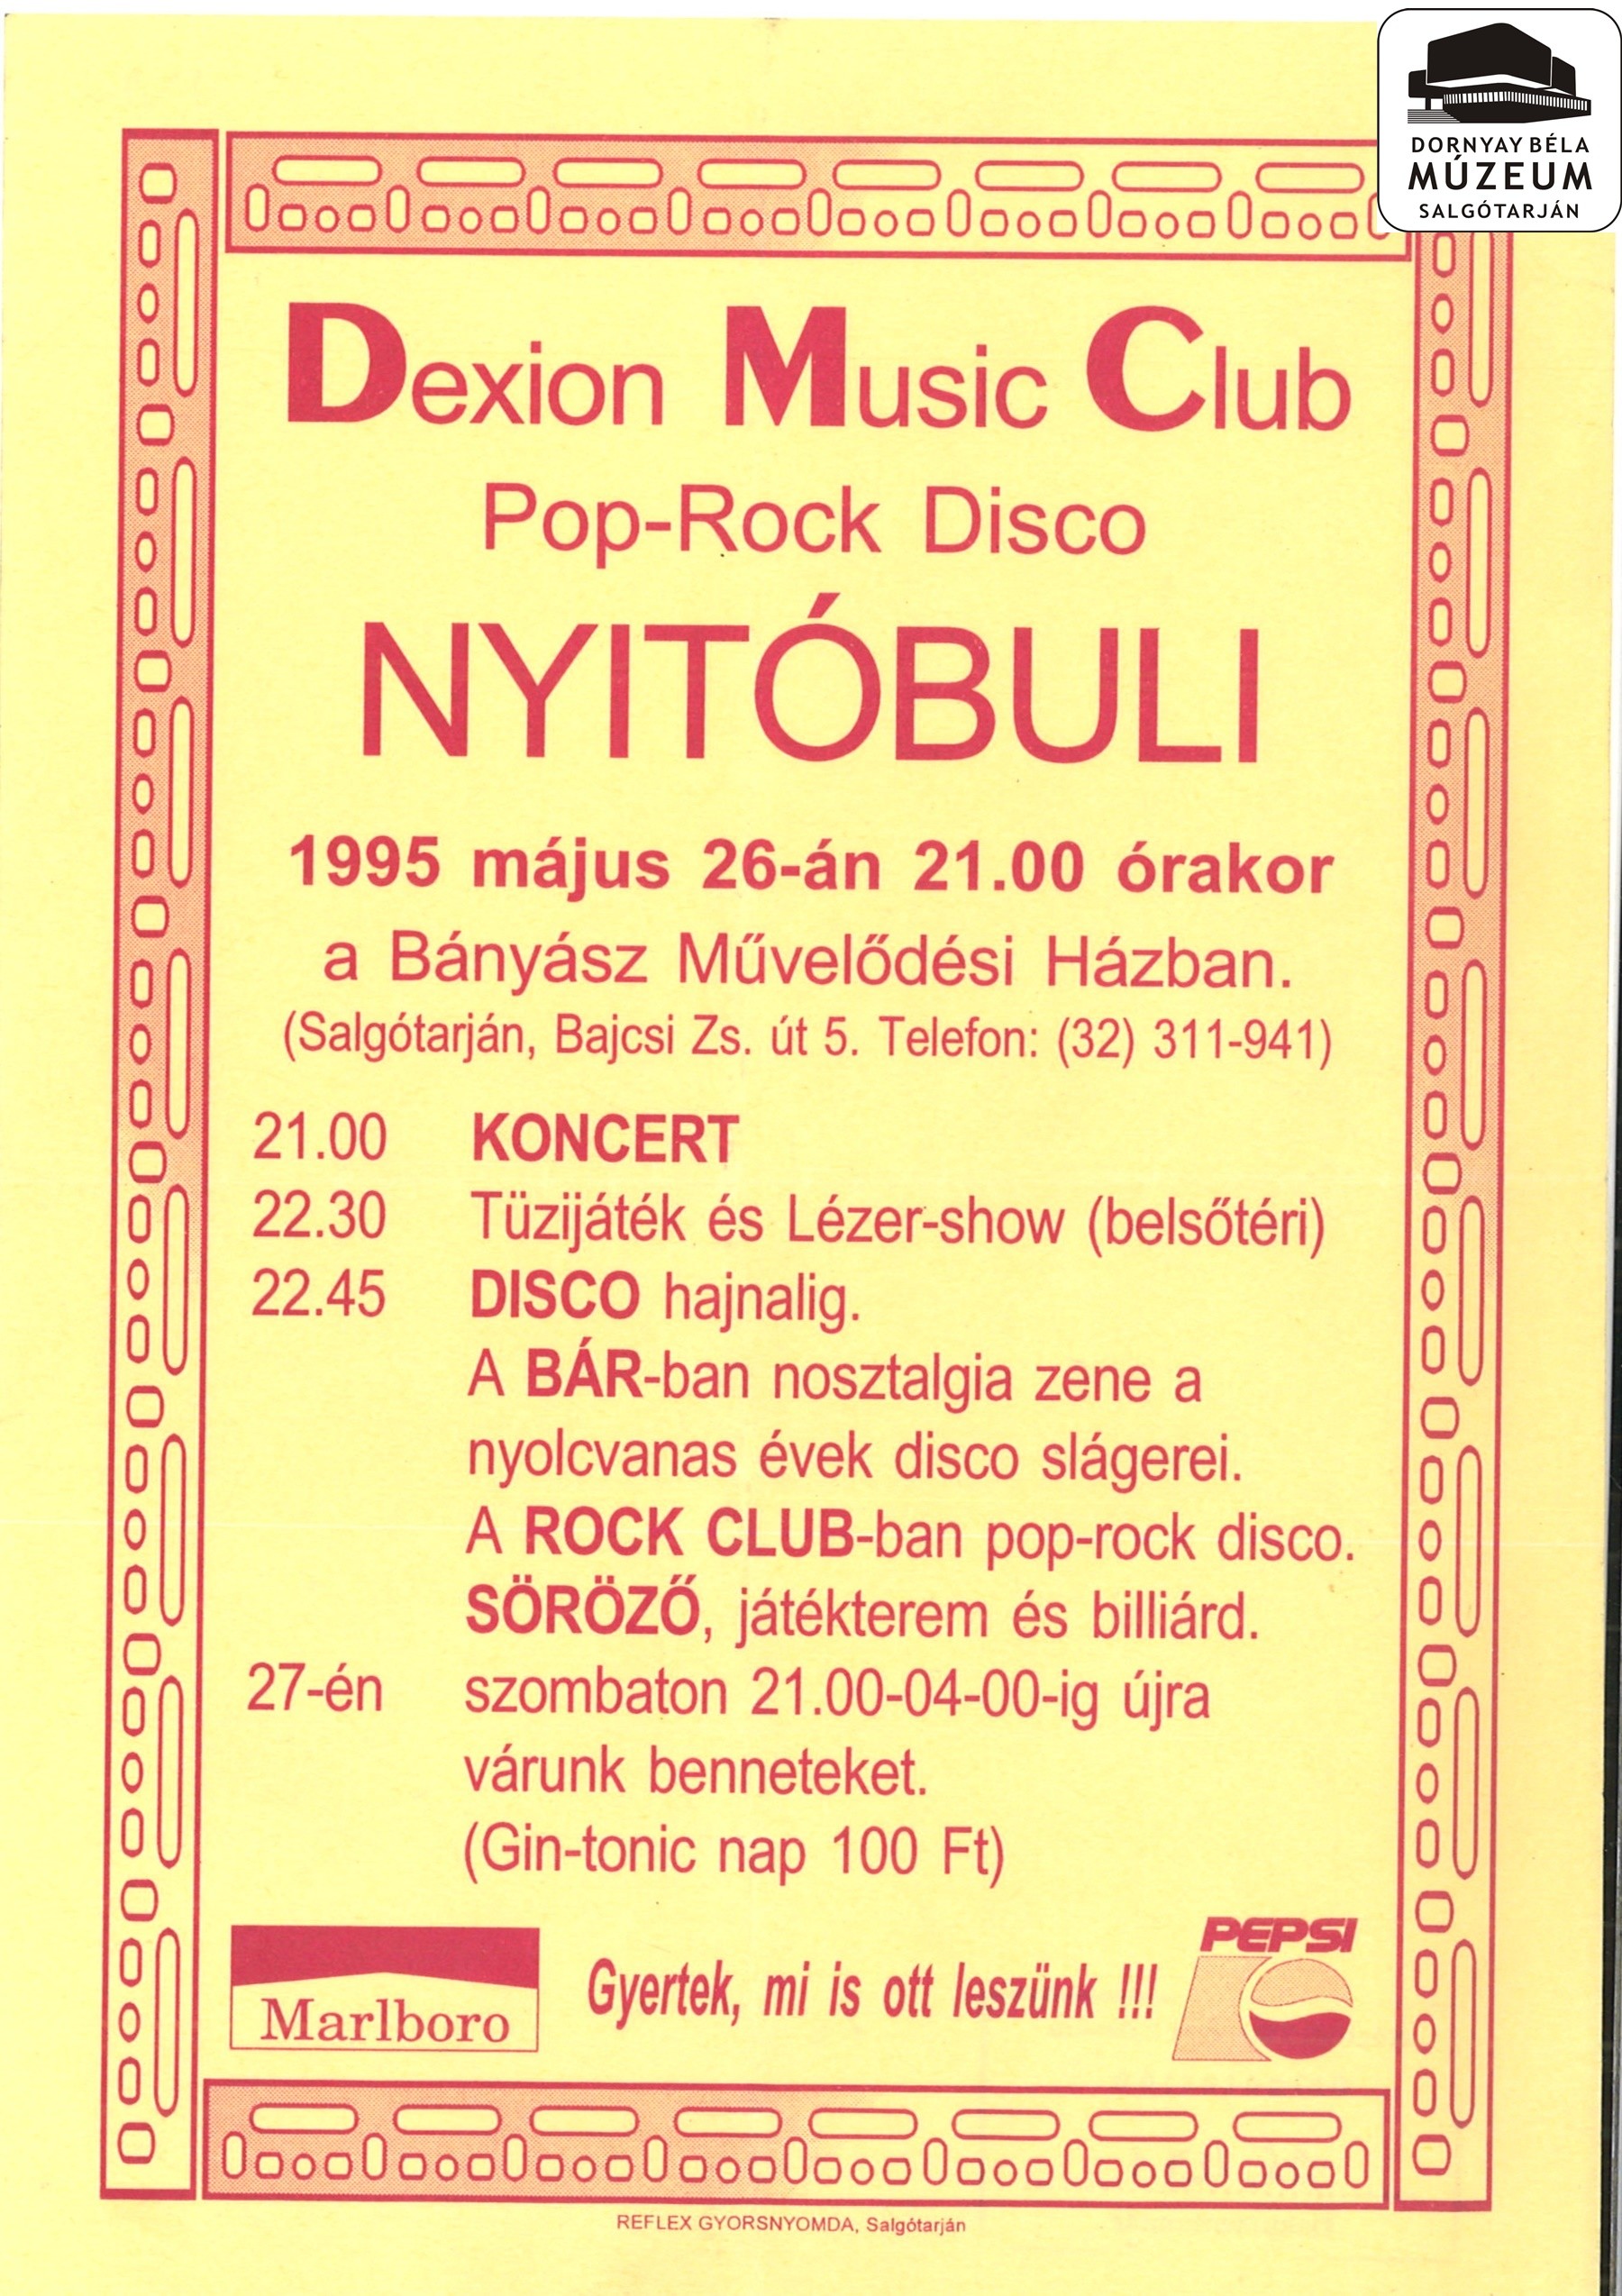 Dexion Music Club nyitóbulija Salgótarjánban (Dornyay Béla Múzeum, Salgótarján CC BY-NC-SA)